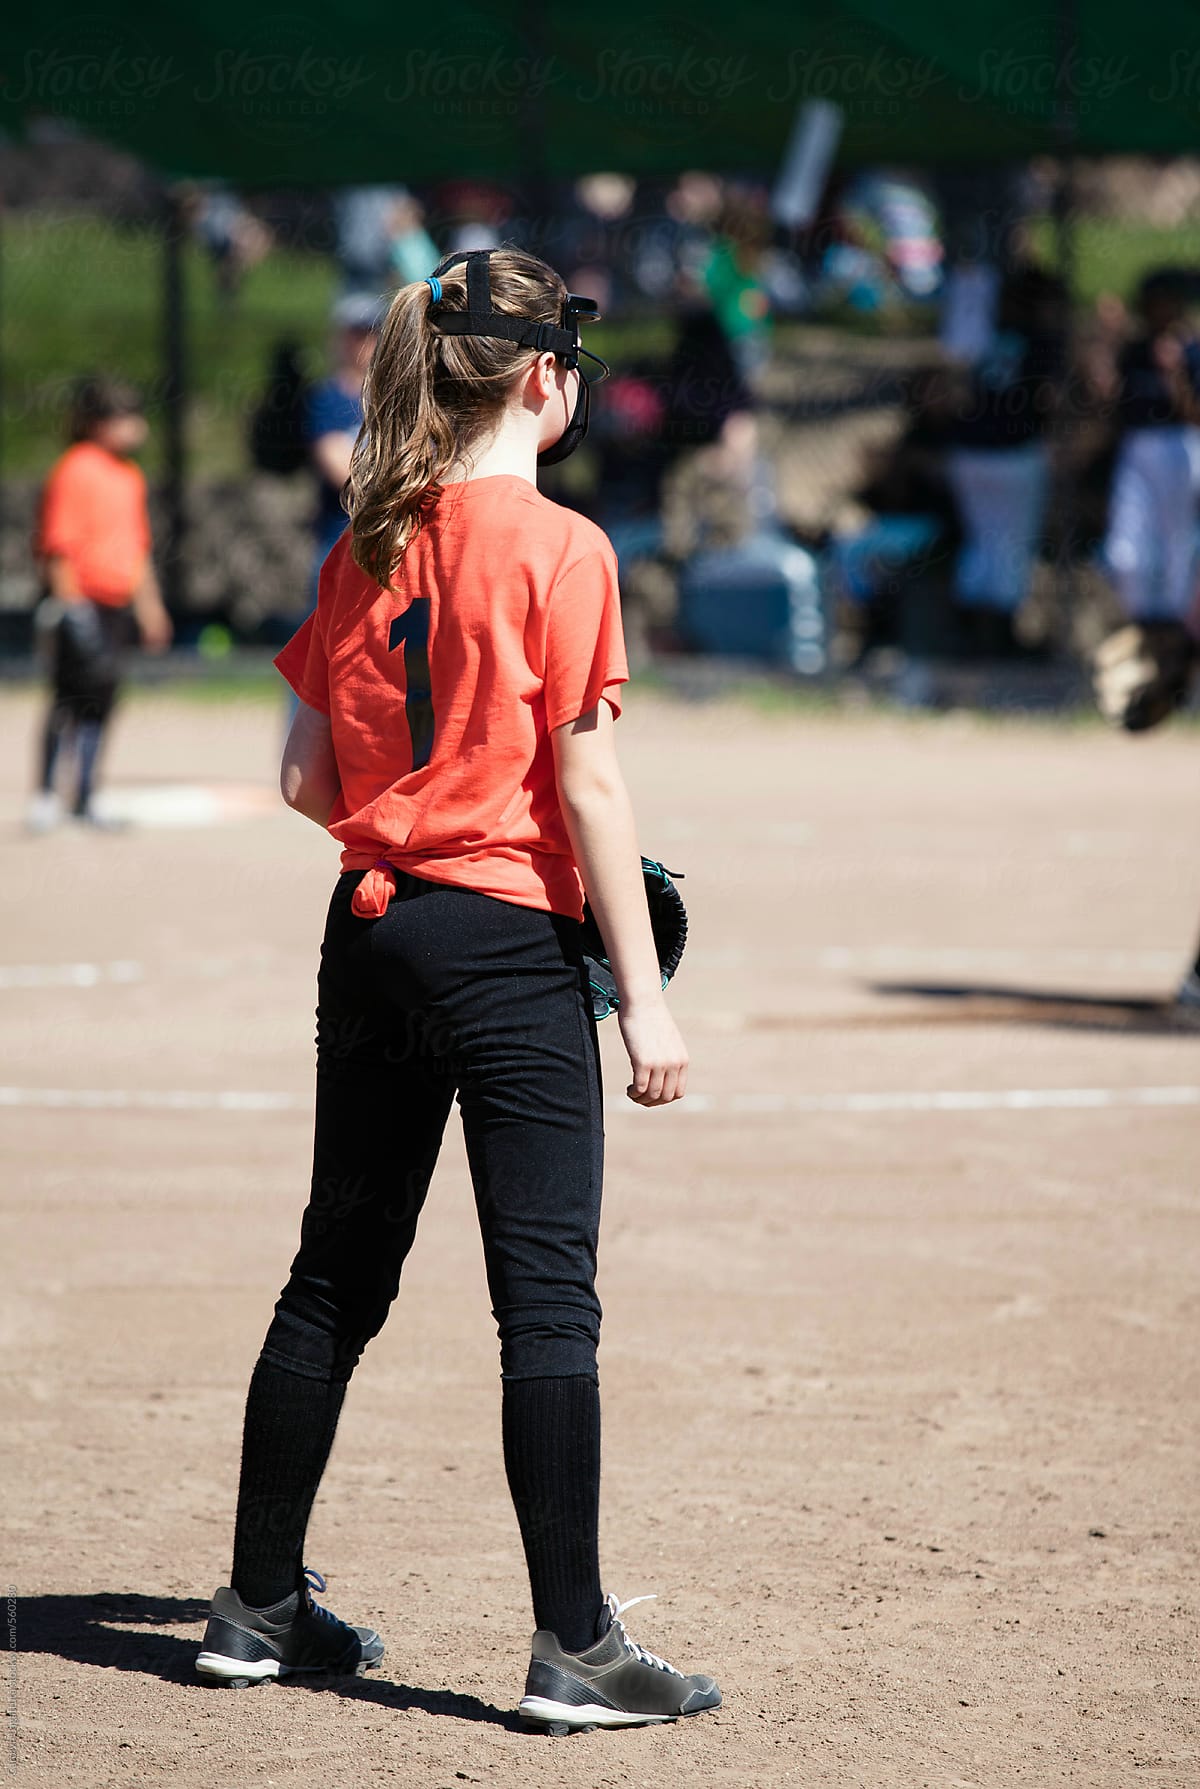 Teenage girl in a softball game wearing protective head gear